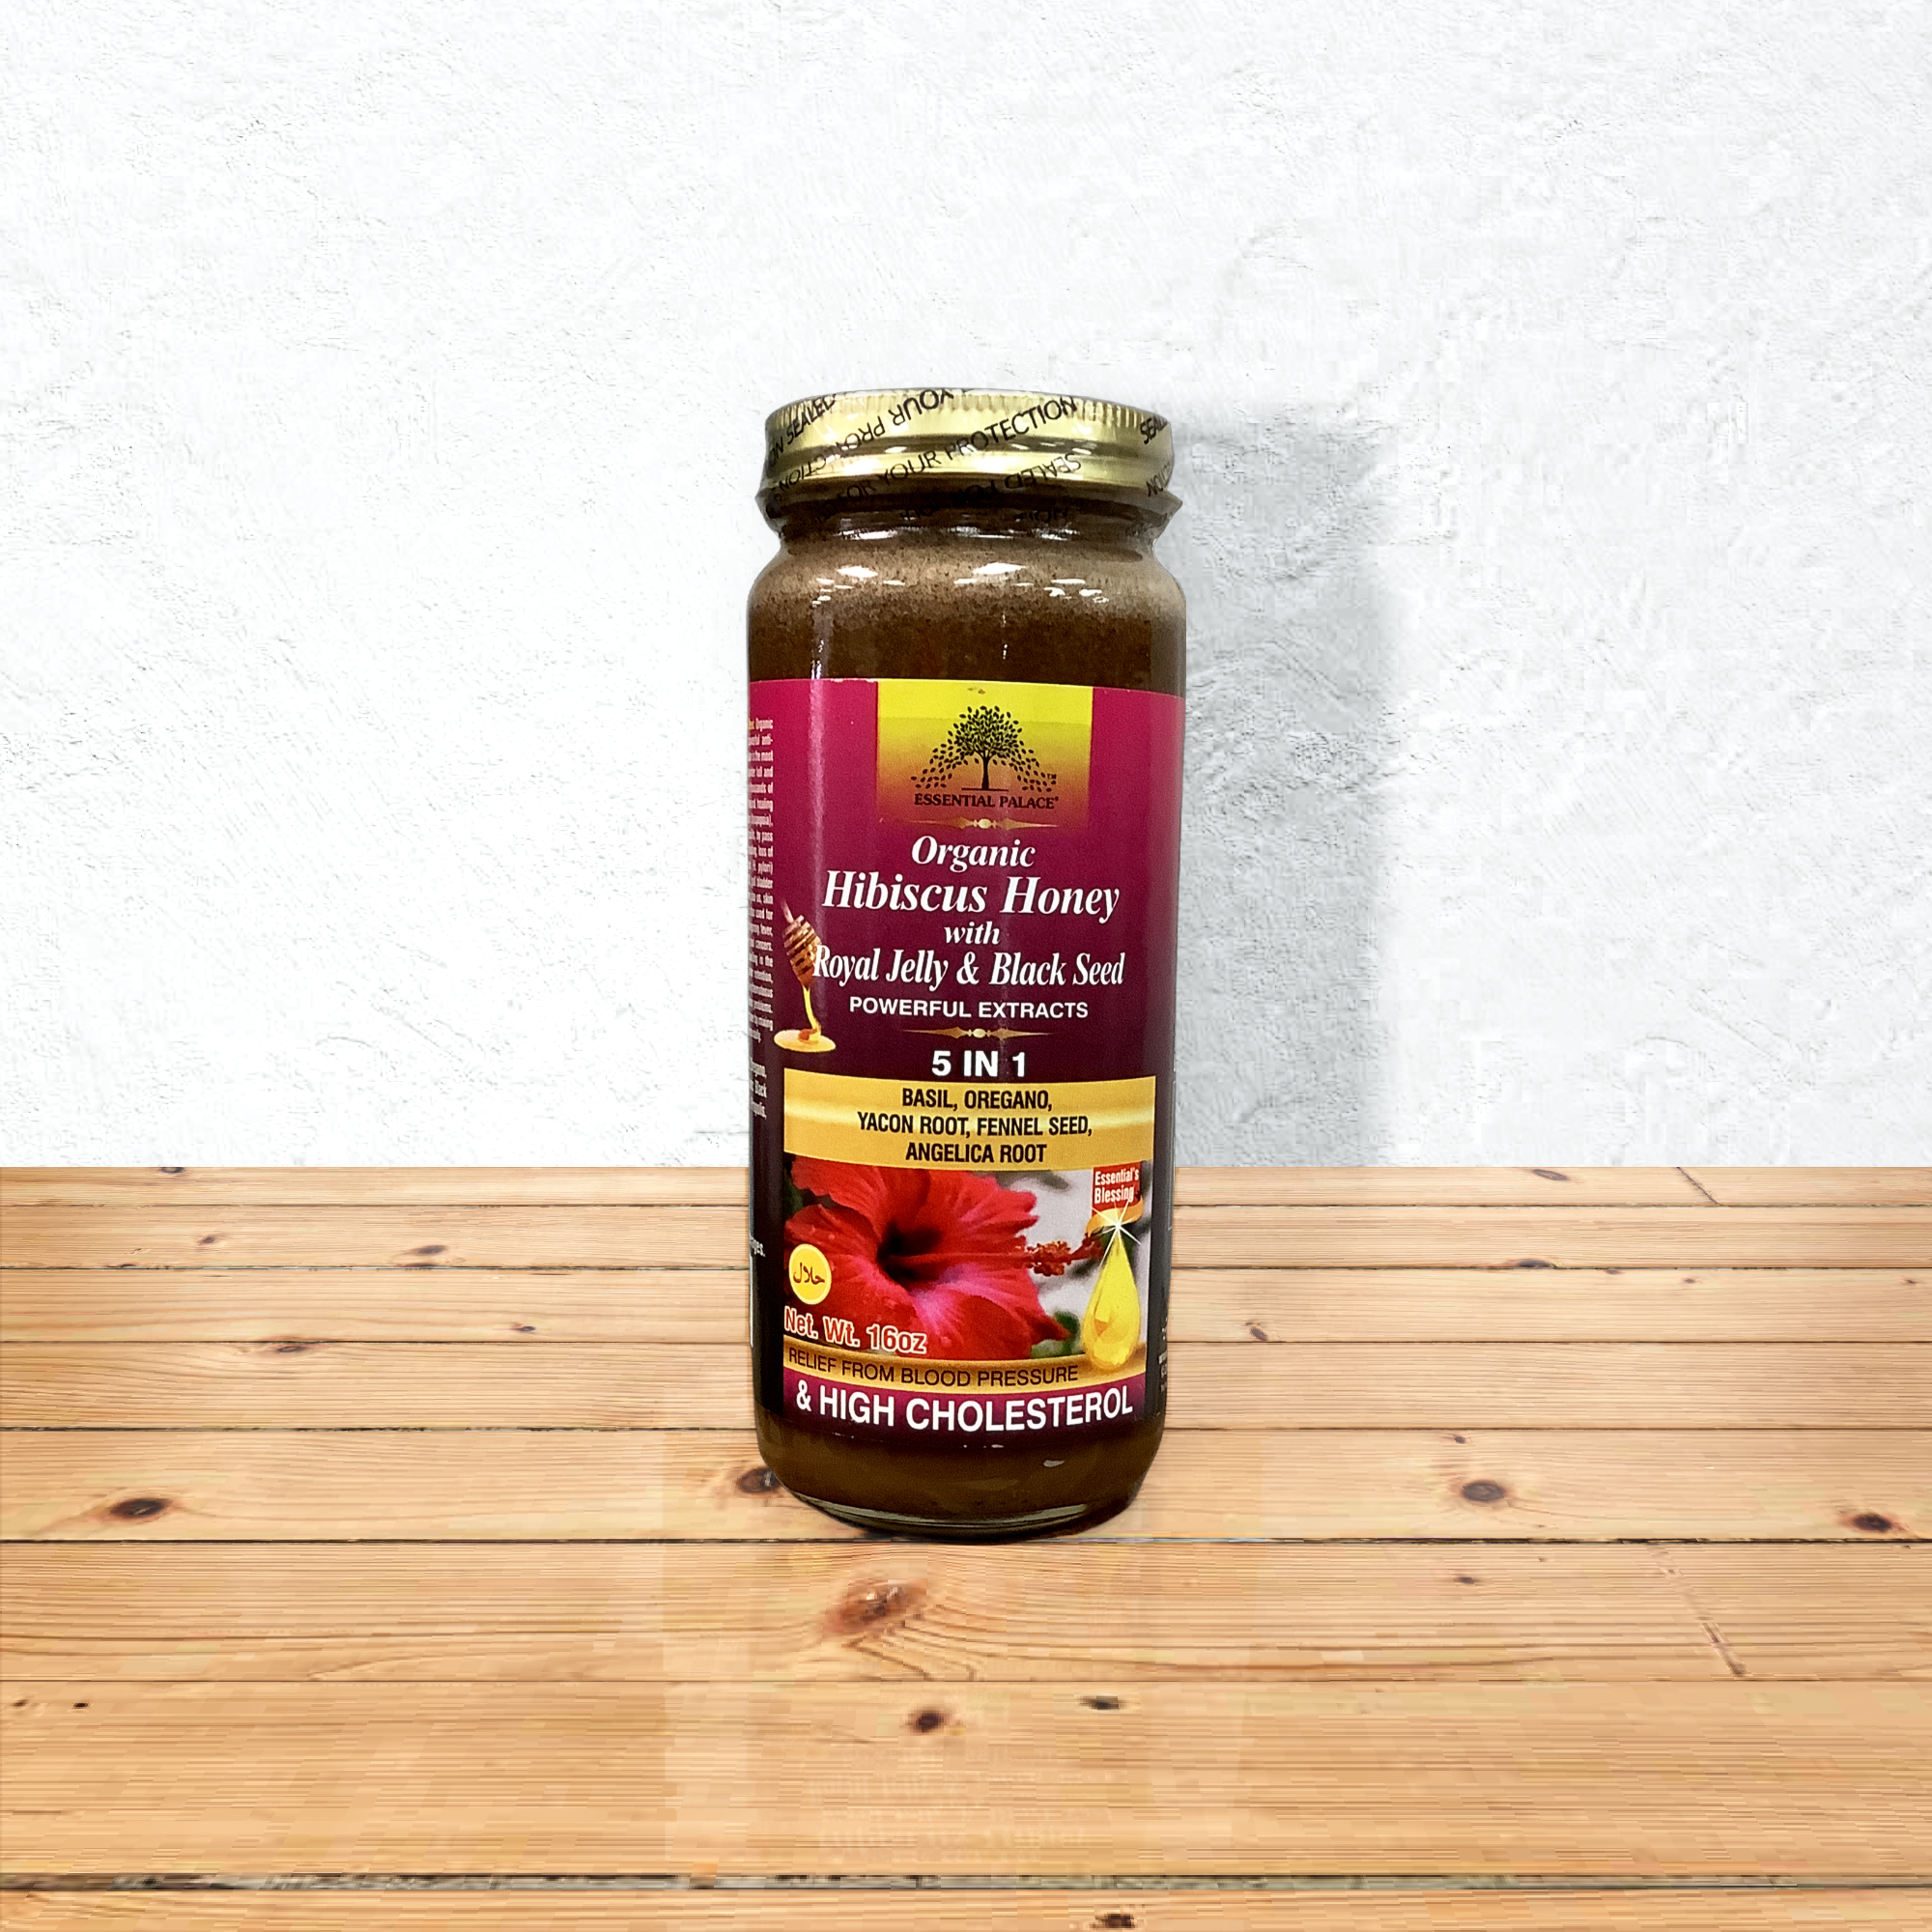 Organic Hibiscus Honey W/ Royal Jelly & Black Seed